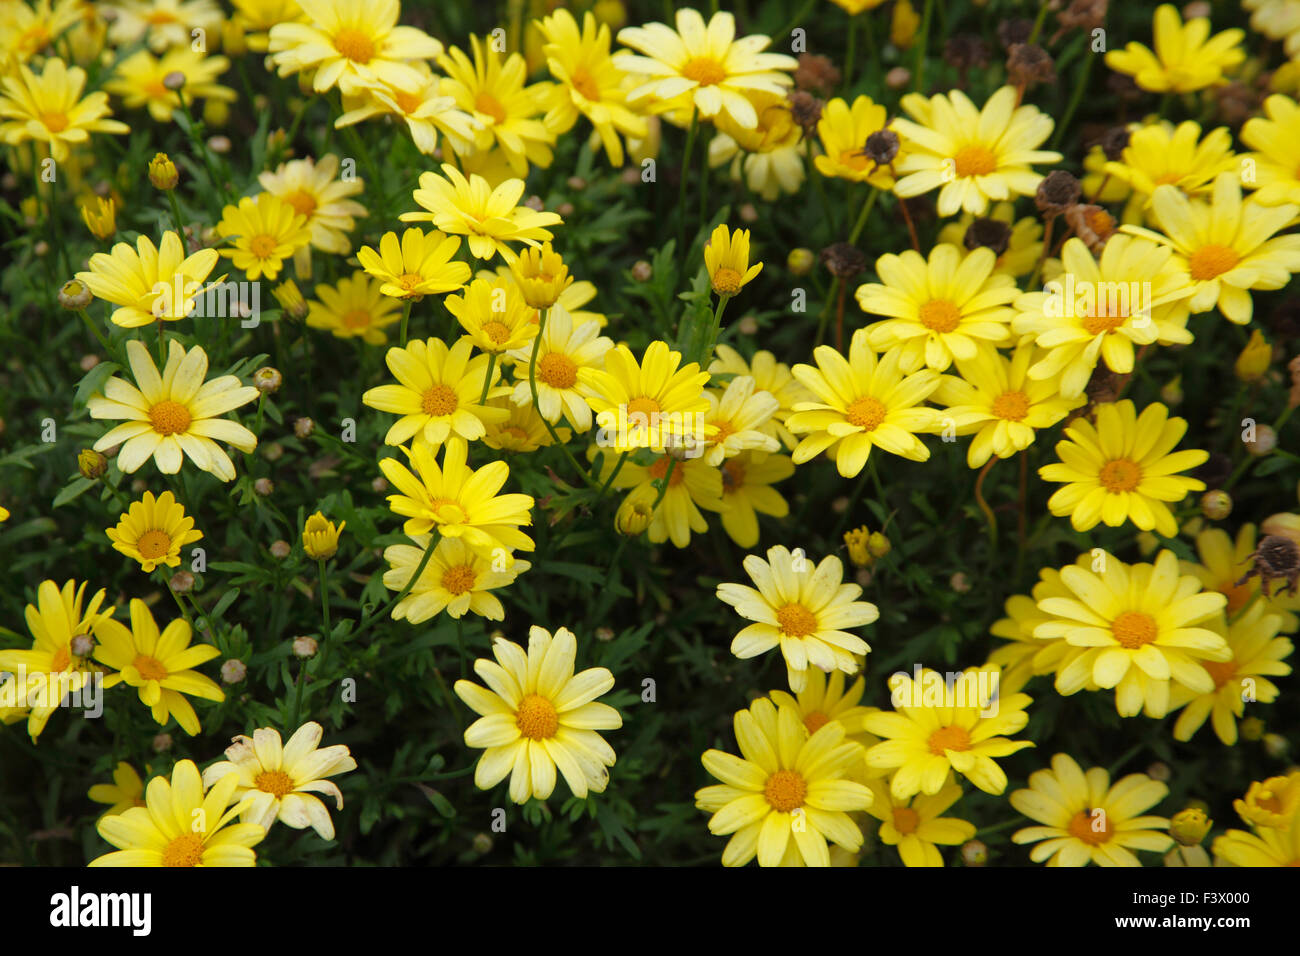 Agryanthemum frutescens Beauty yellow 'Wesaryel' close up of flowers Stock Photo